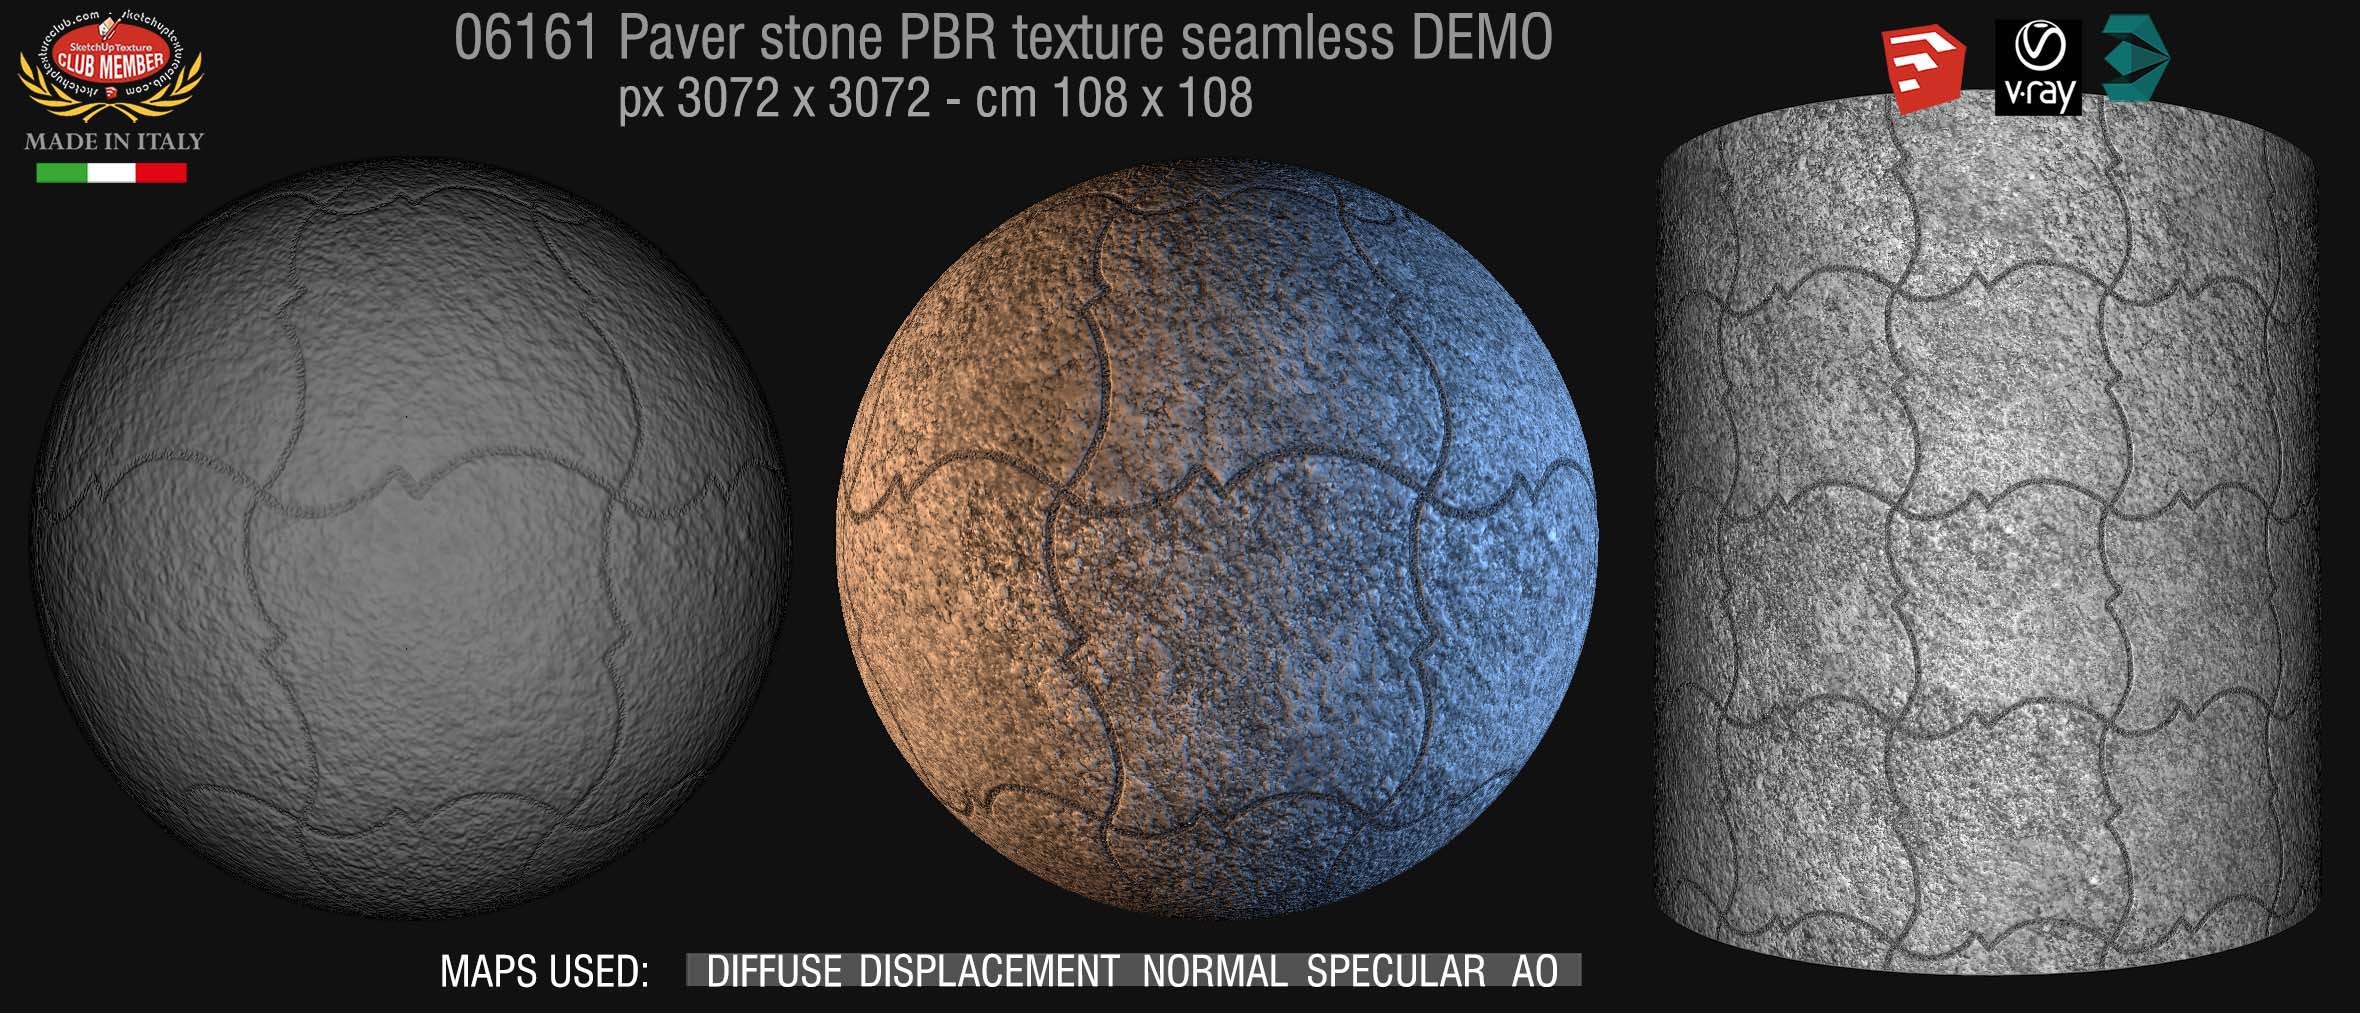 06161 paver stone PBR texture seamless DEMO